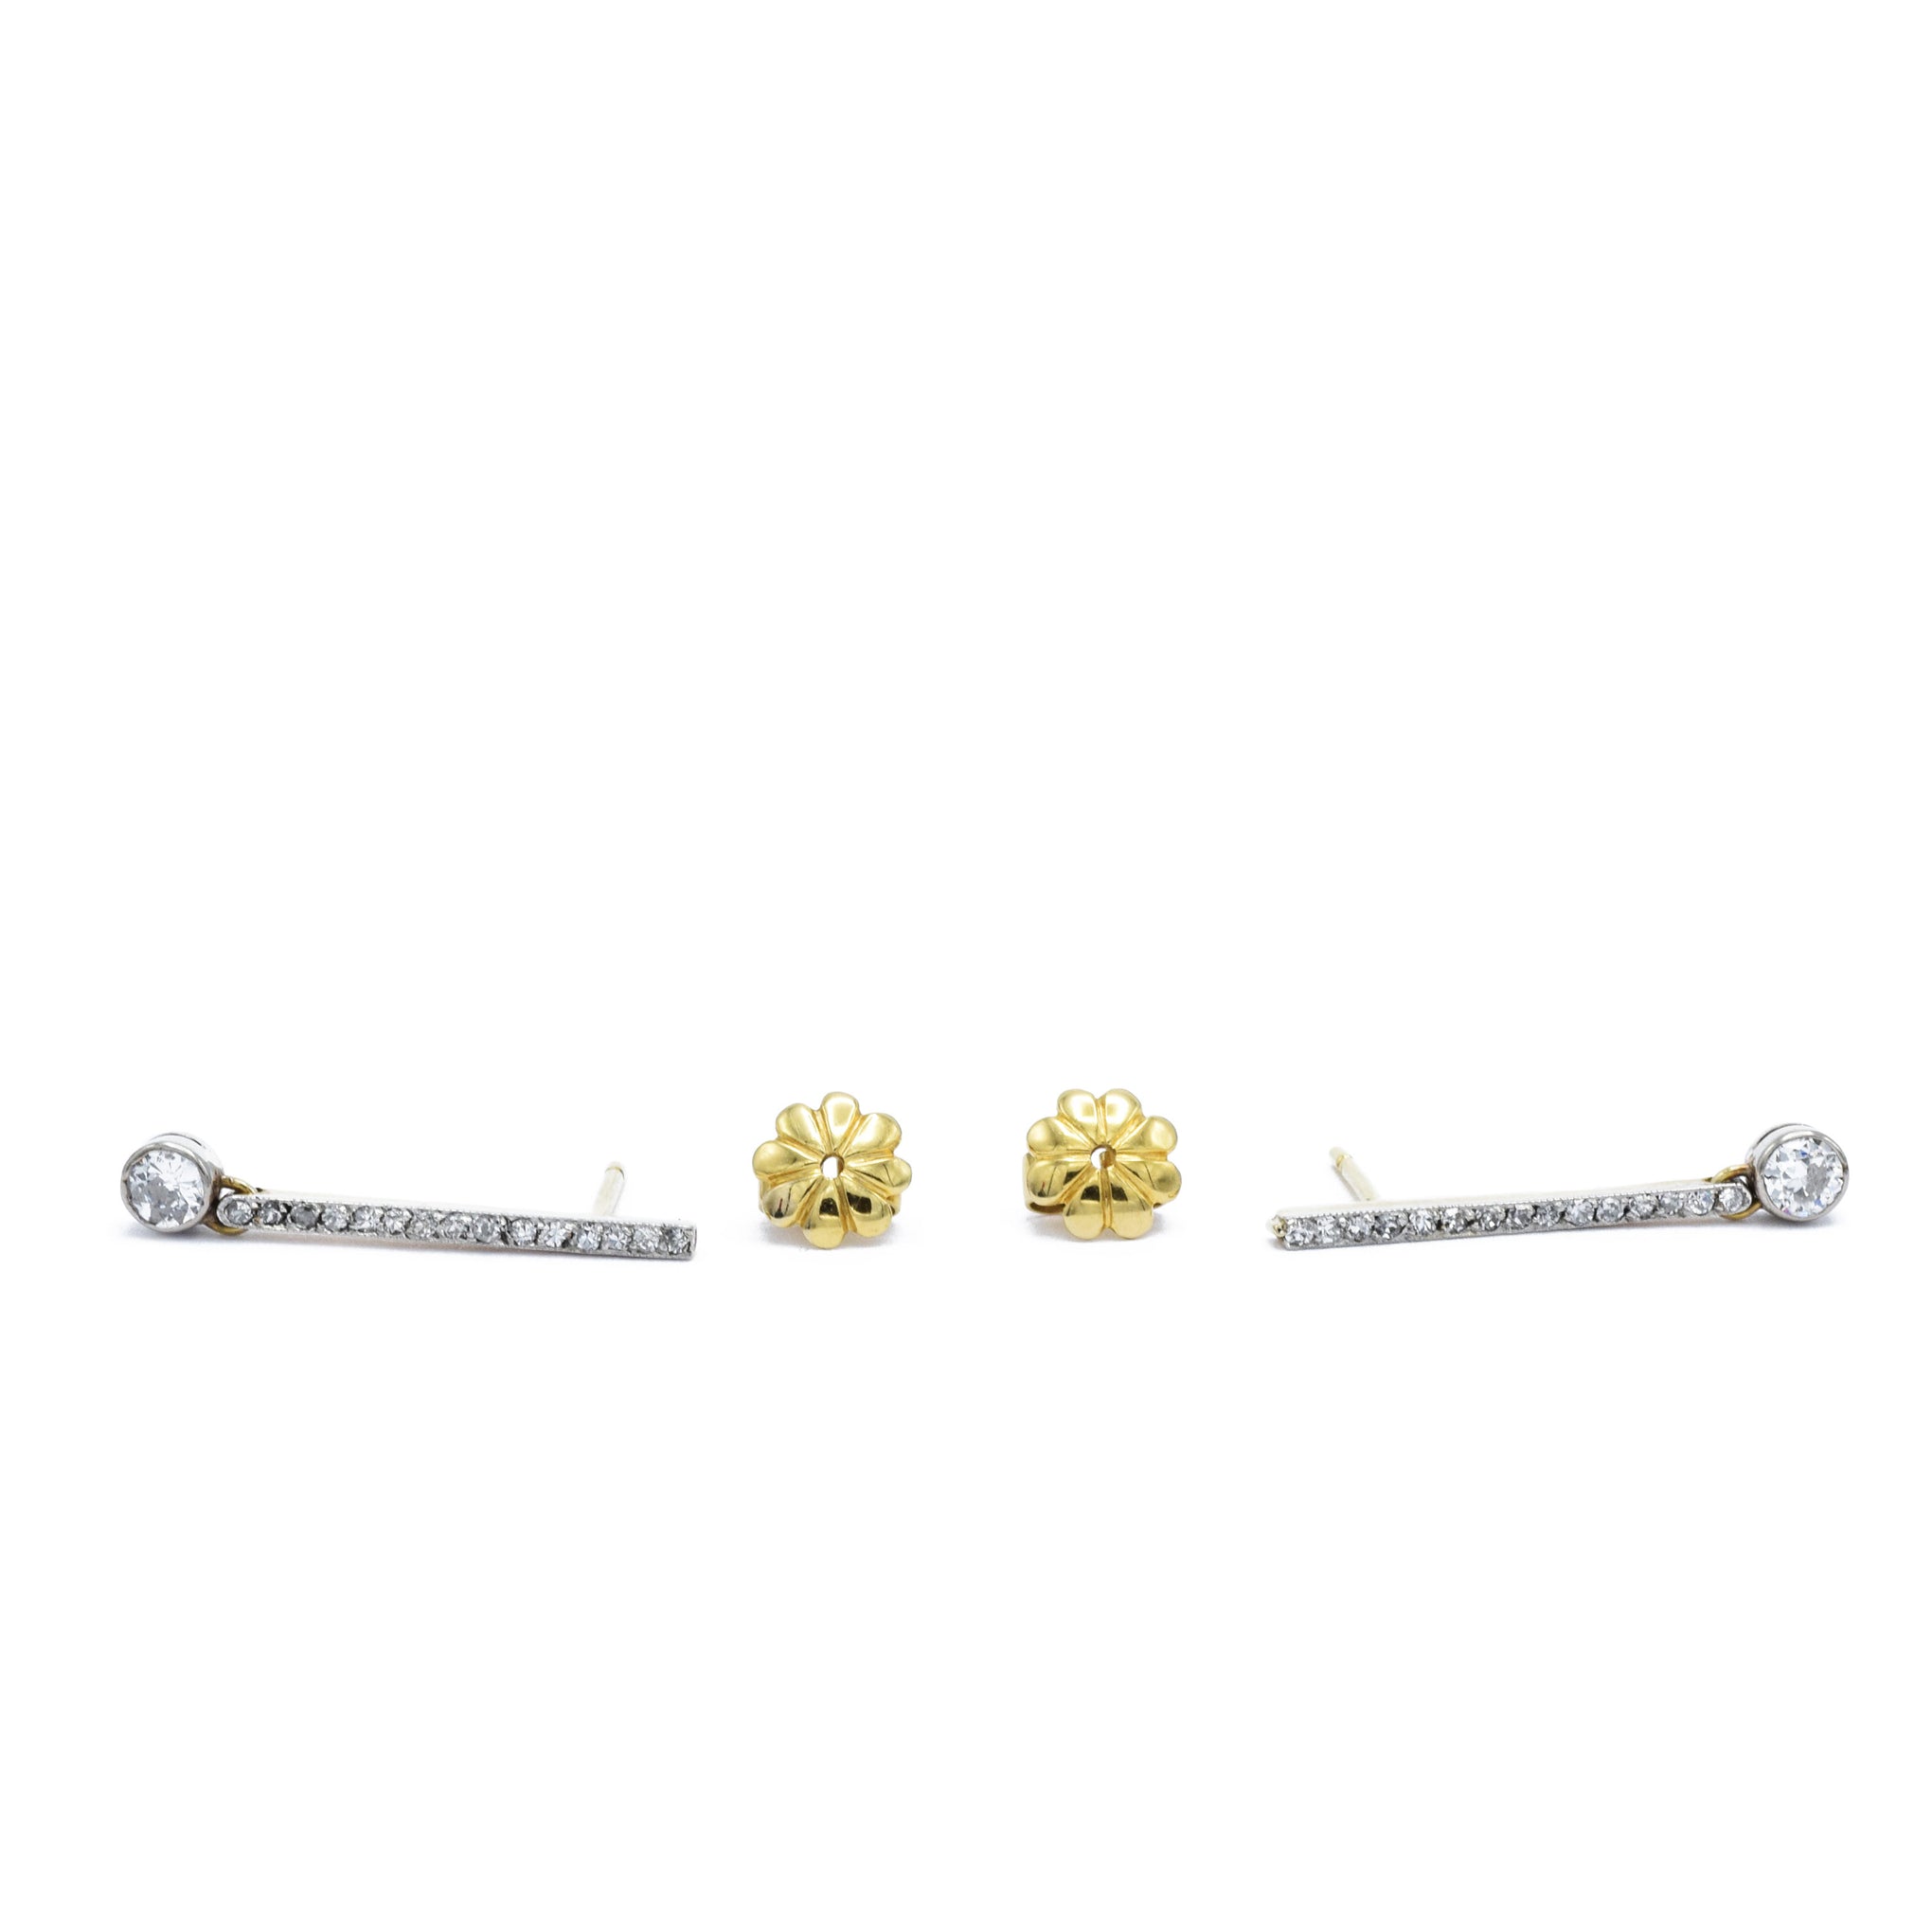 Estate 14kt Gold and Diamond Earrings